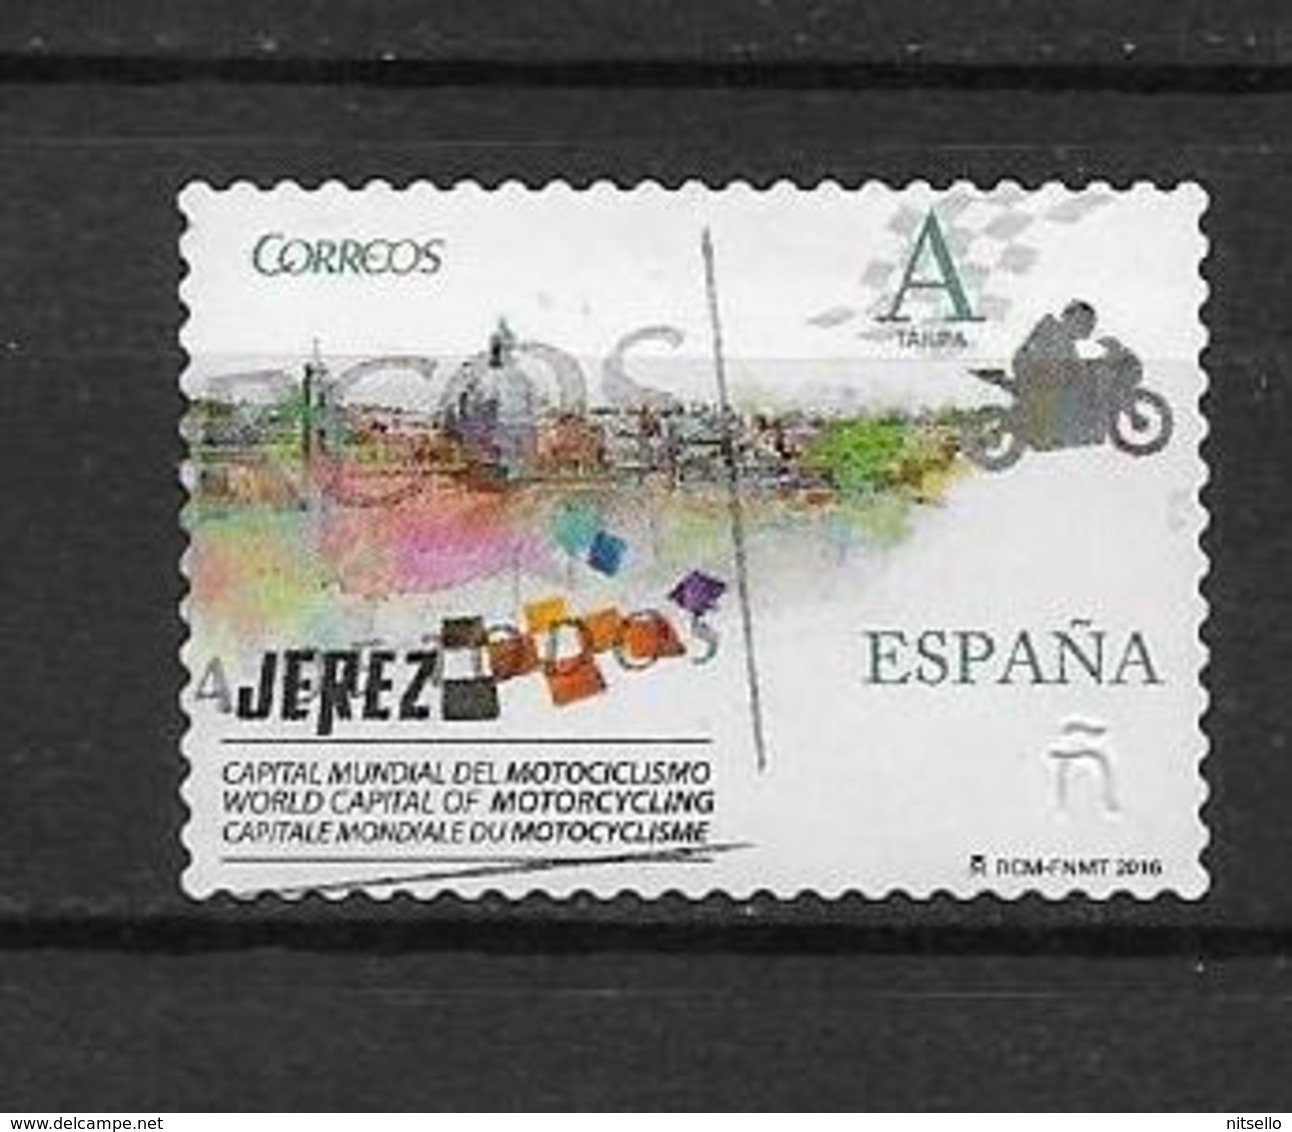 LOTE 1873 /// ESPAÑA 2016  -  JEREZ  CAPITAL MUNDIAL DEL MOTOCICLISMO - Used Stamps